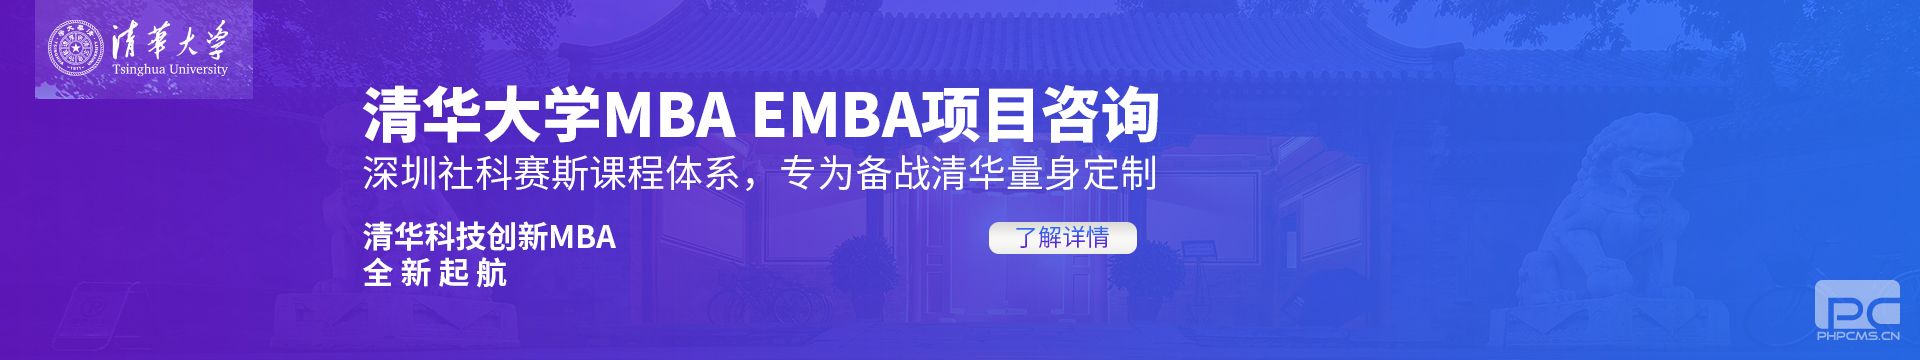 清华MBA EMBA